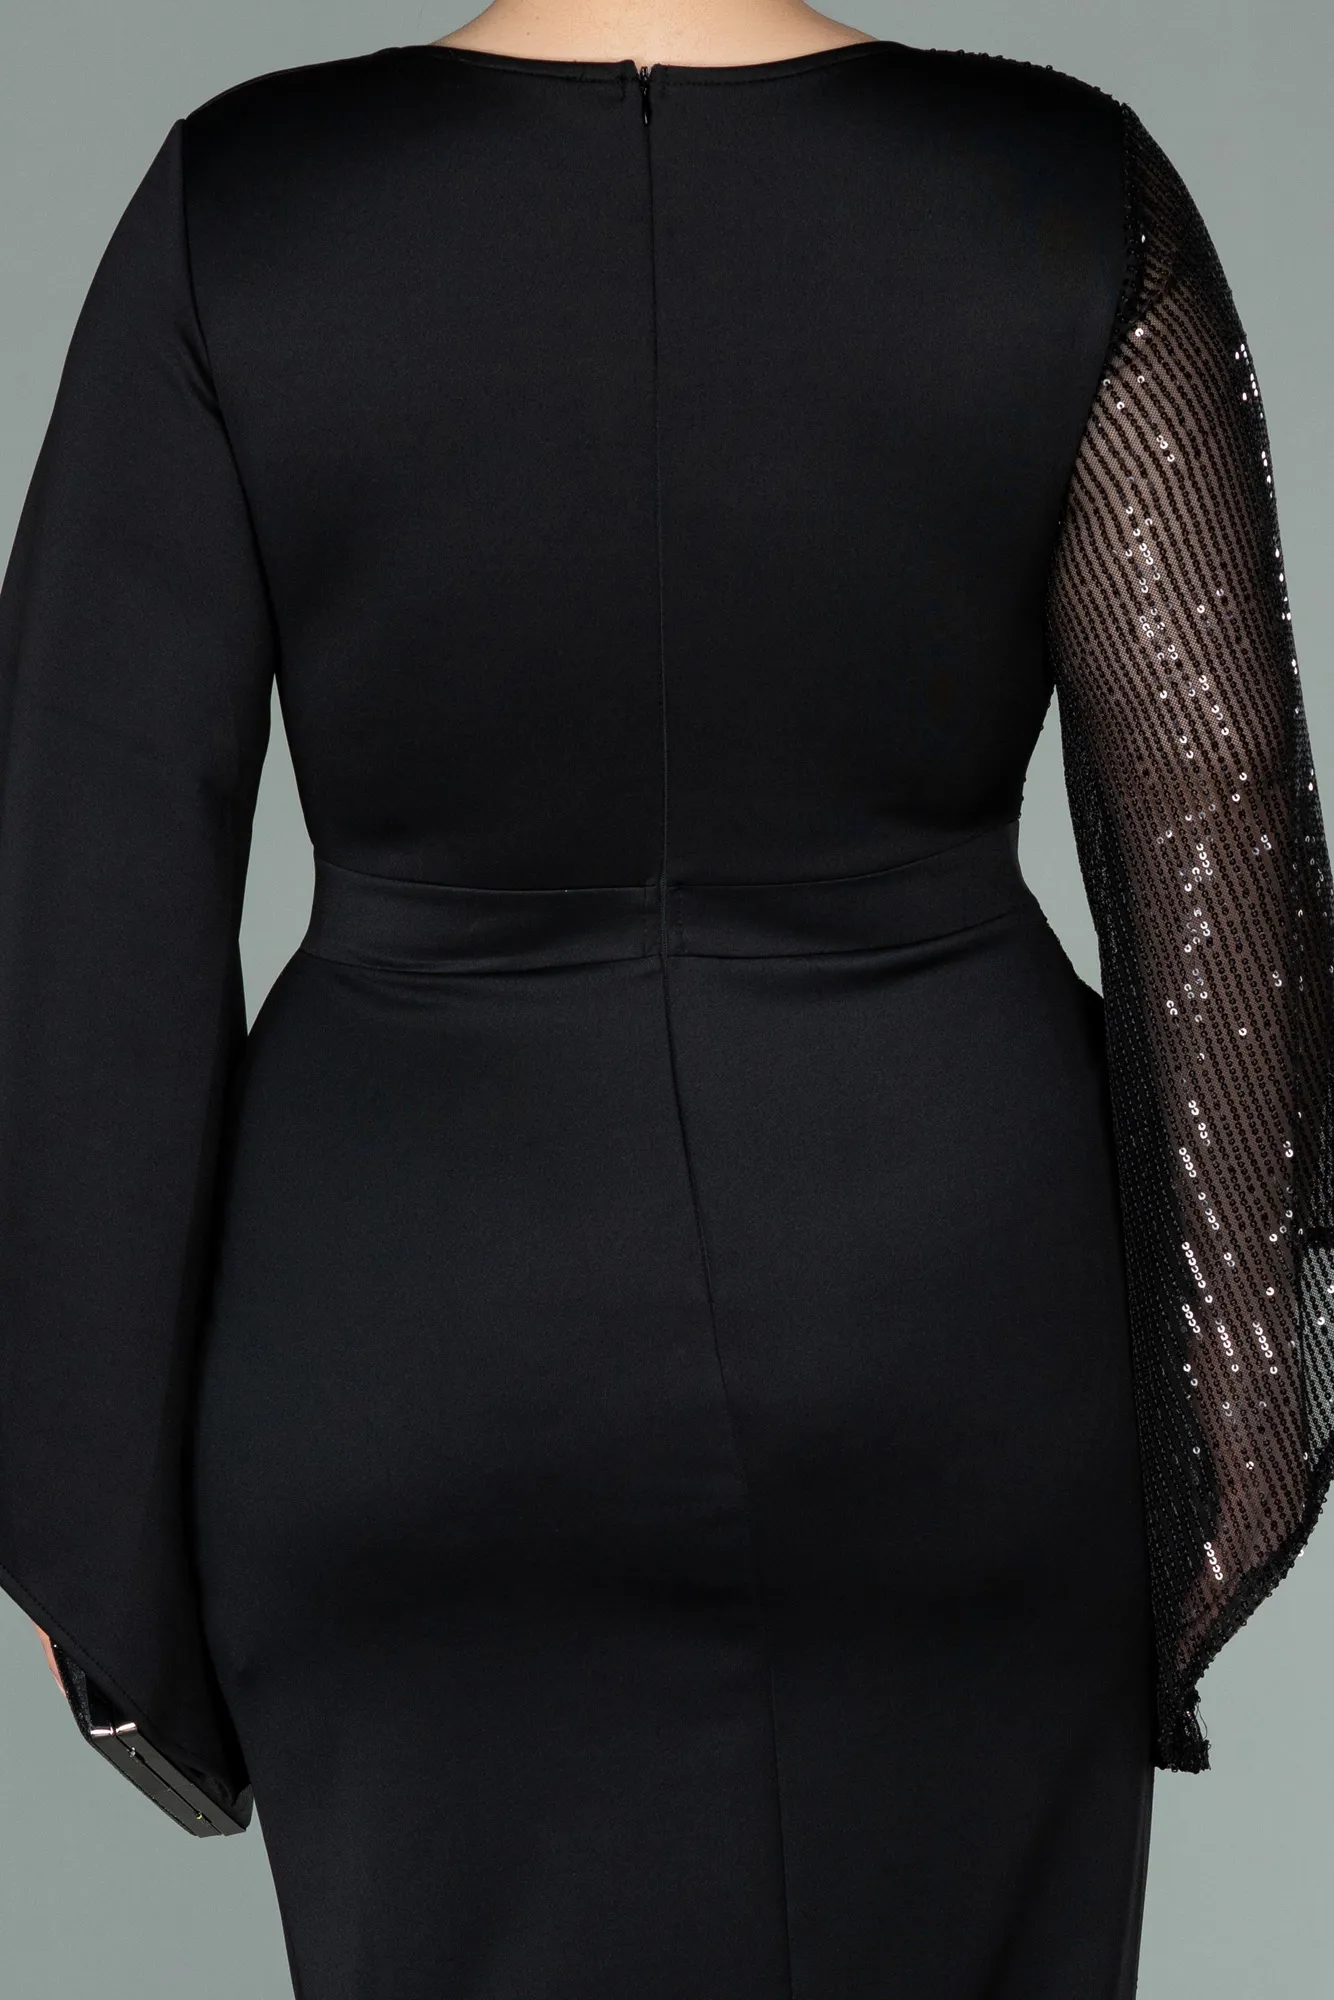 Black-Long Plus Size Evening Dress ABU2149